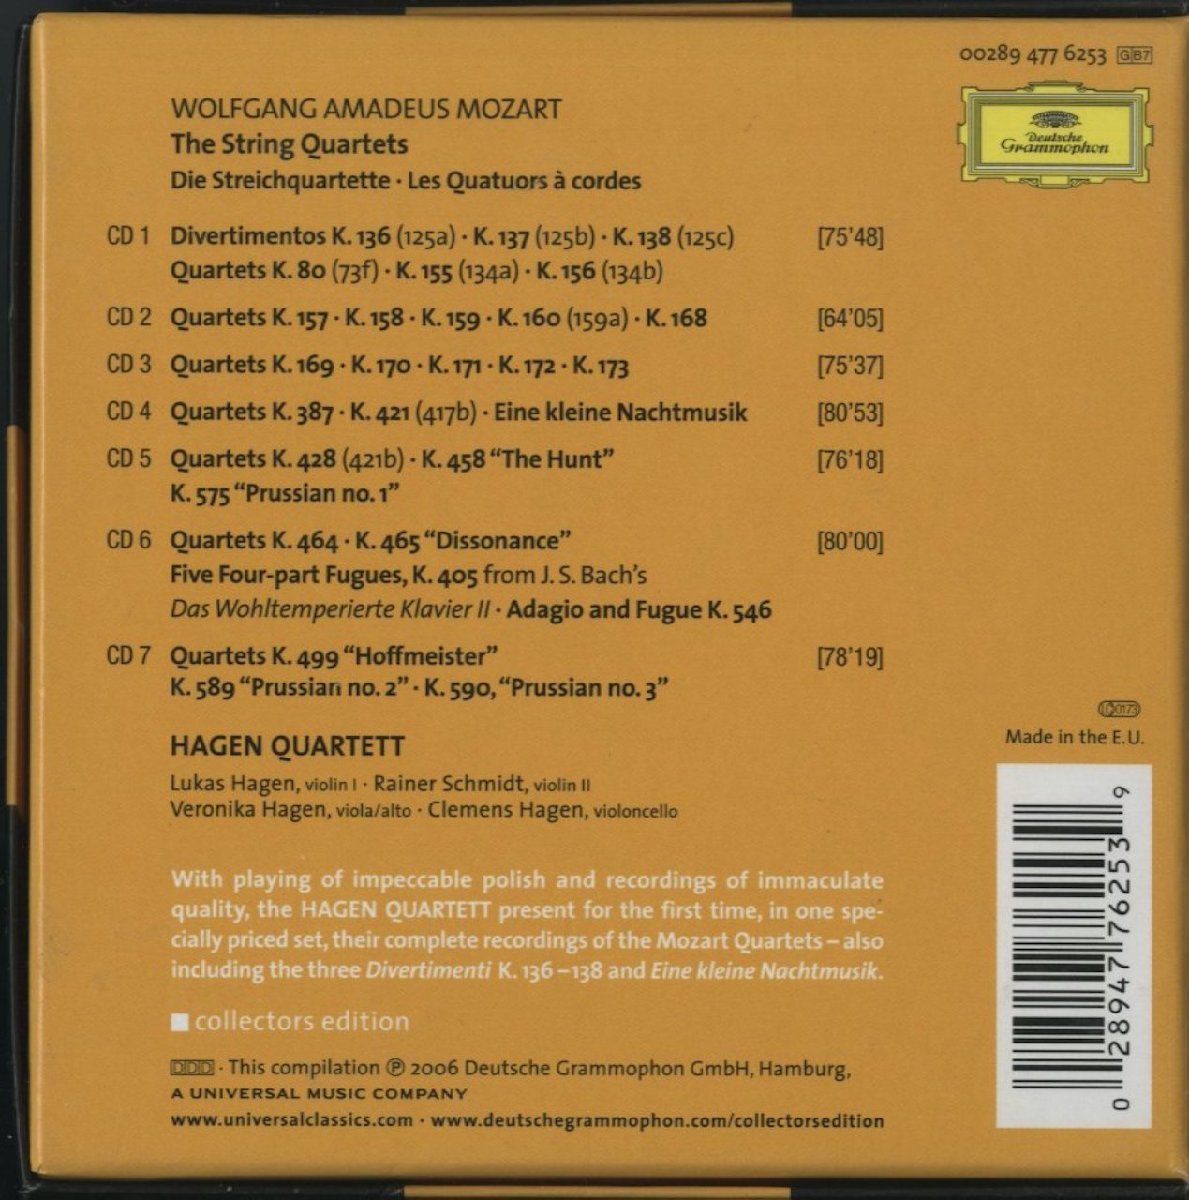 CD/ 7CD / ハーゲン四重奏団 / モーツァルト：弦楽四重奏曲全集 / 輸入盤 BOX 002894776253 40213M_画像2